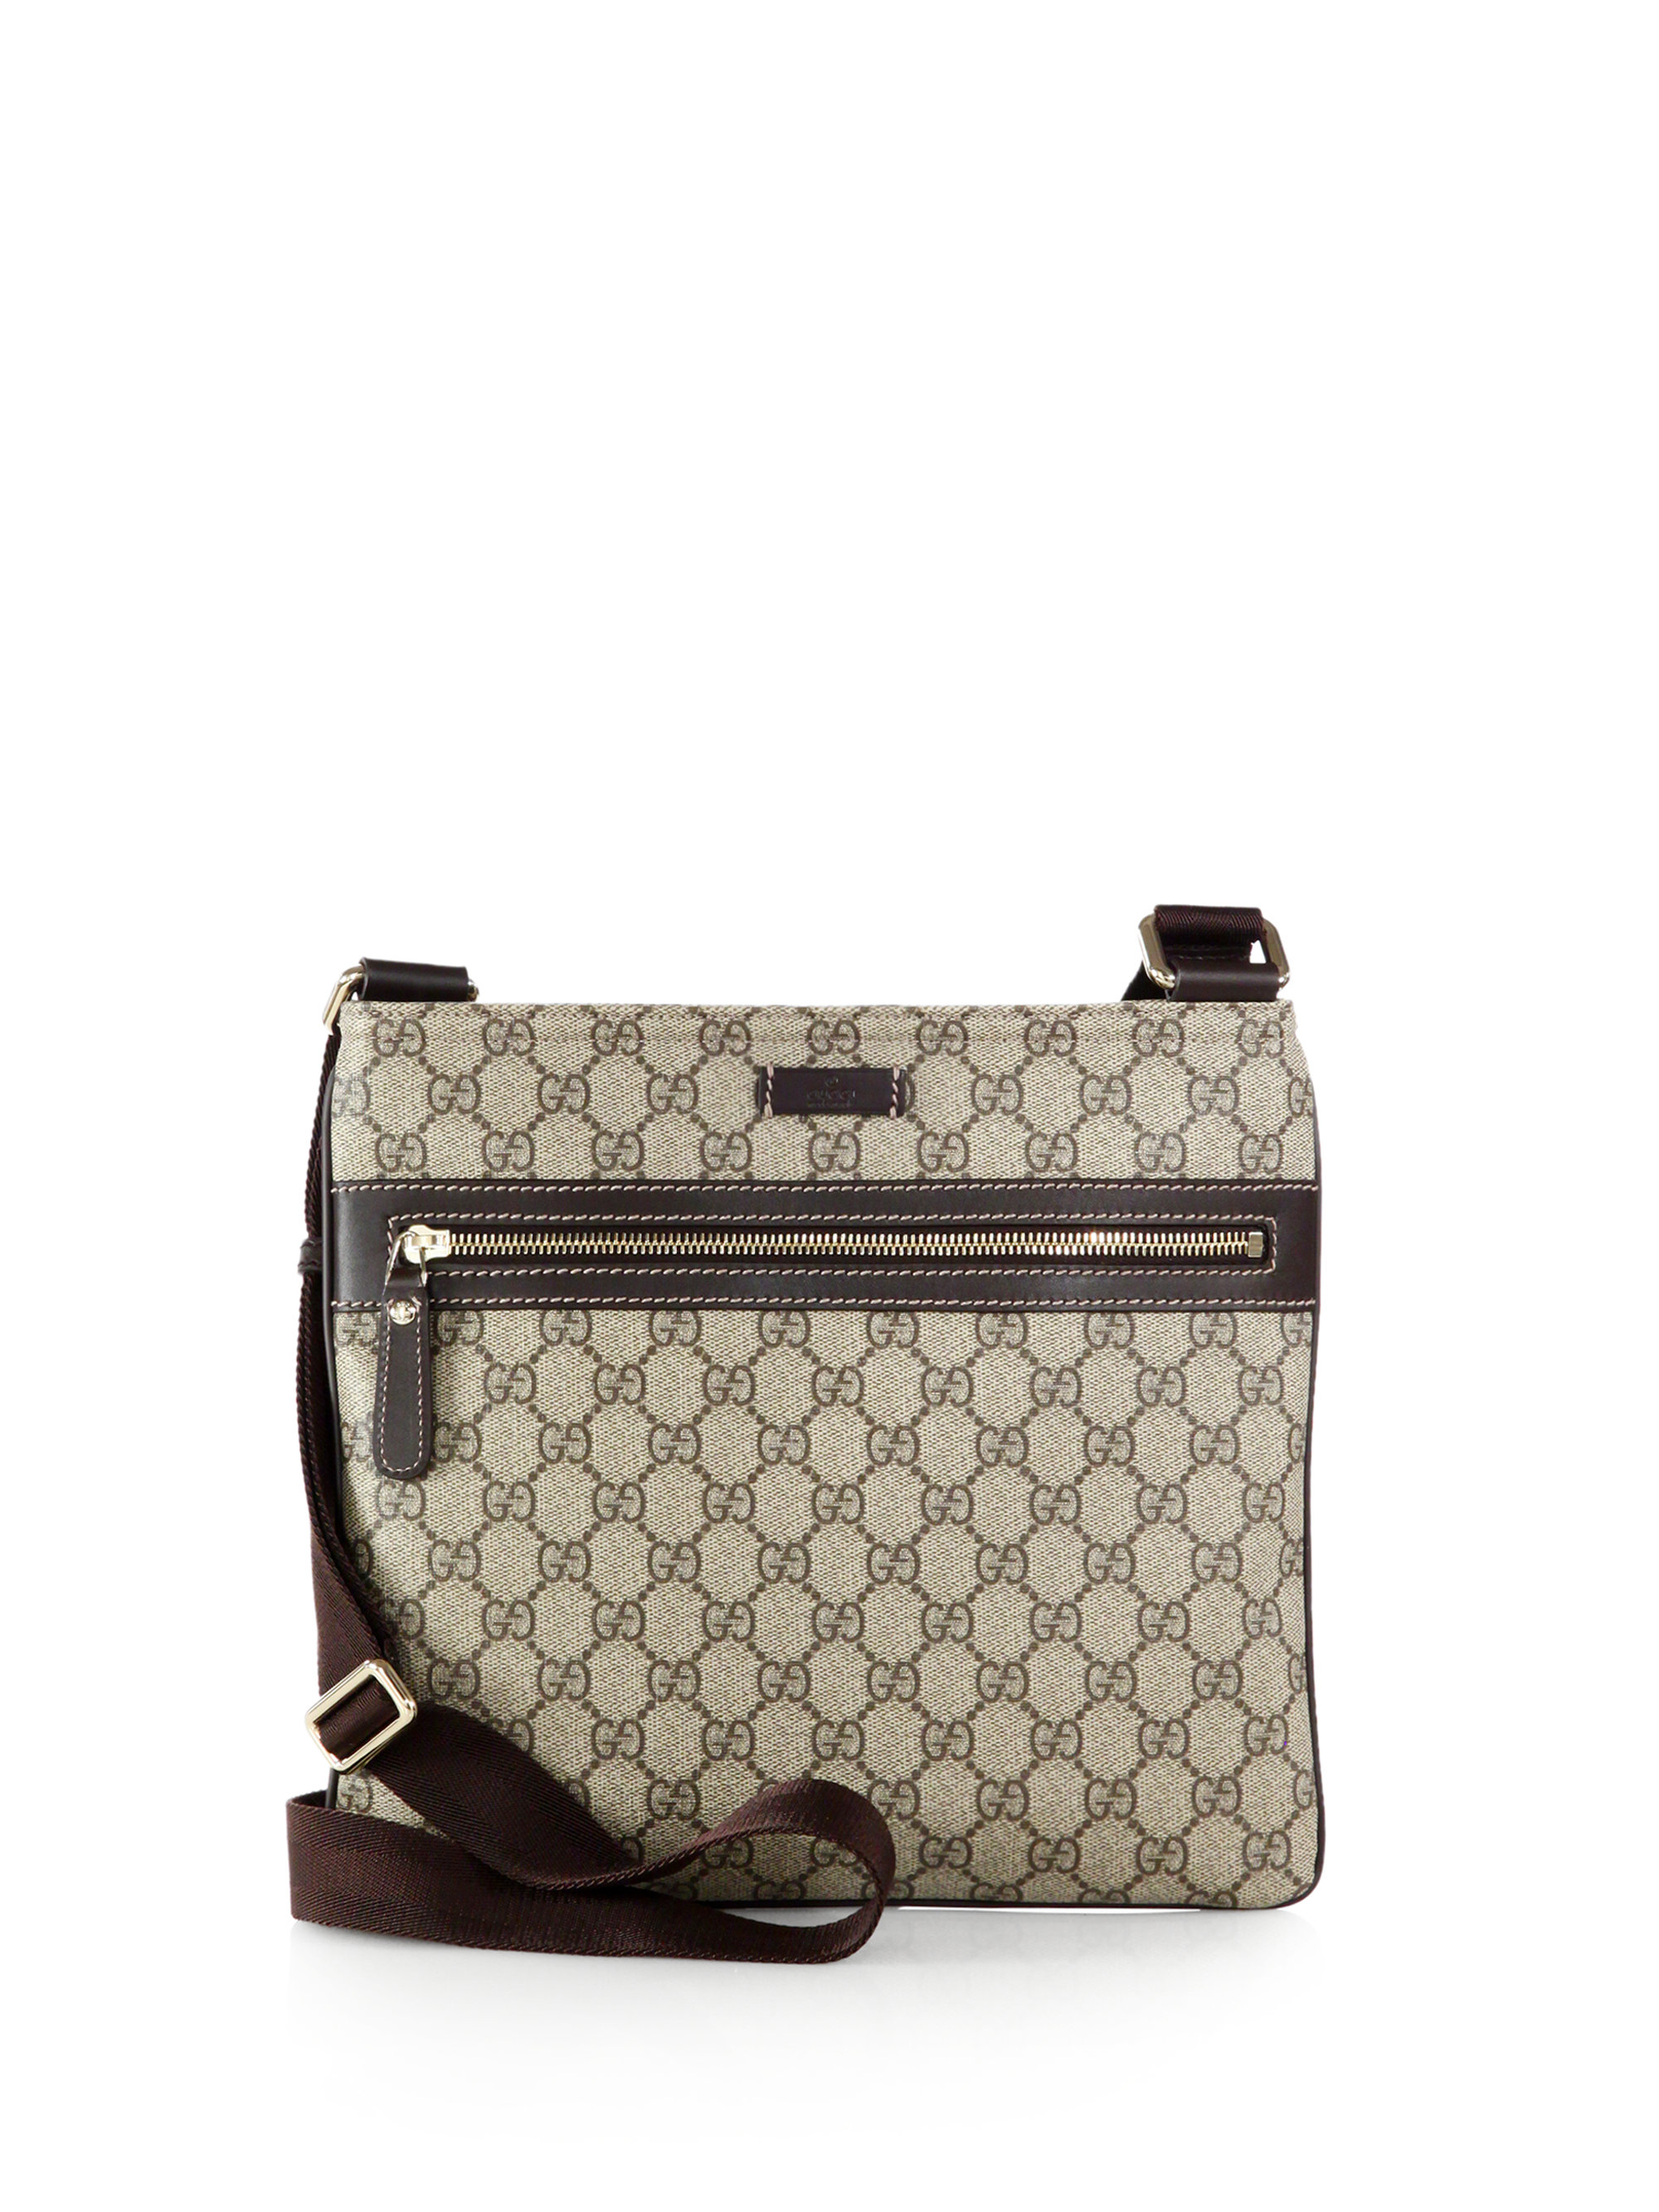 Gucci Cotton Joy GG Supreme Flat Messenger Bag in Brown - Lyst